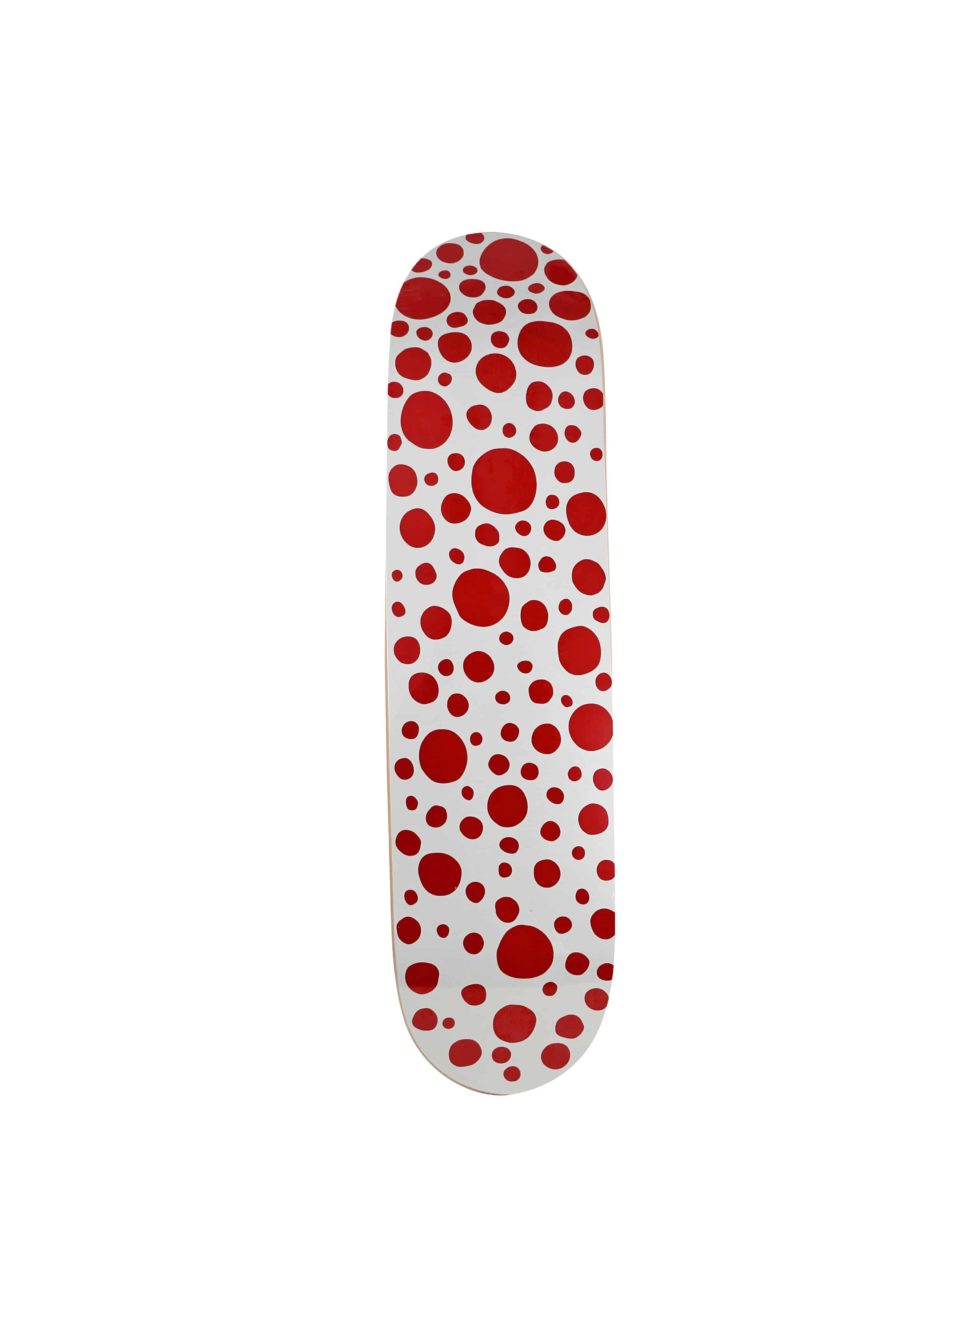 Yayoi Kusama Red Dots Small Skateboard Skate Deck- Baer & Bosch Auctioneers